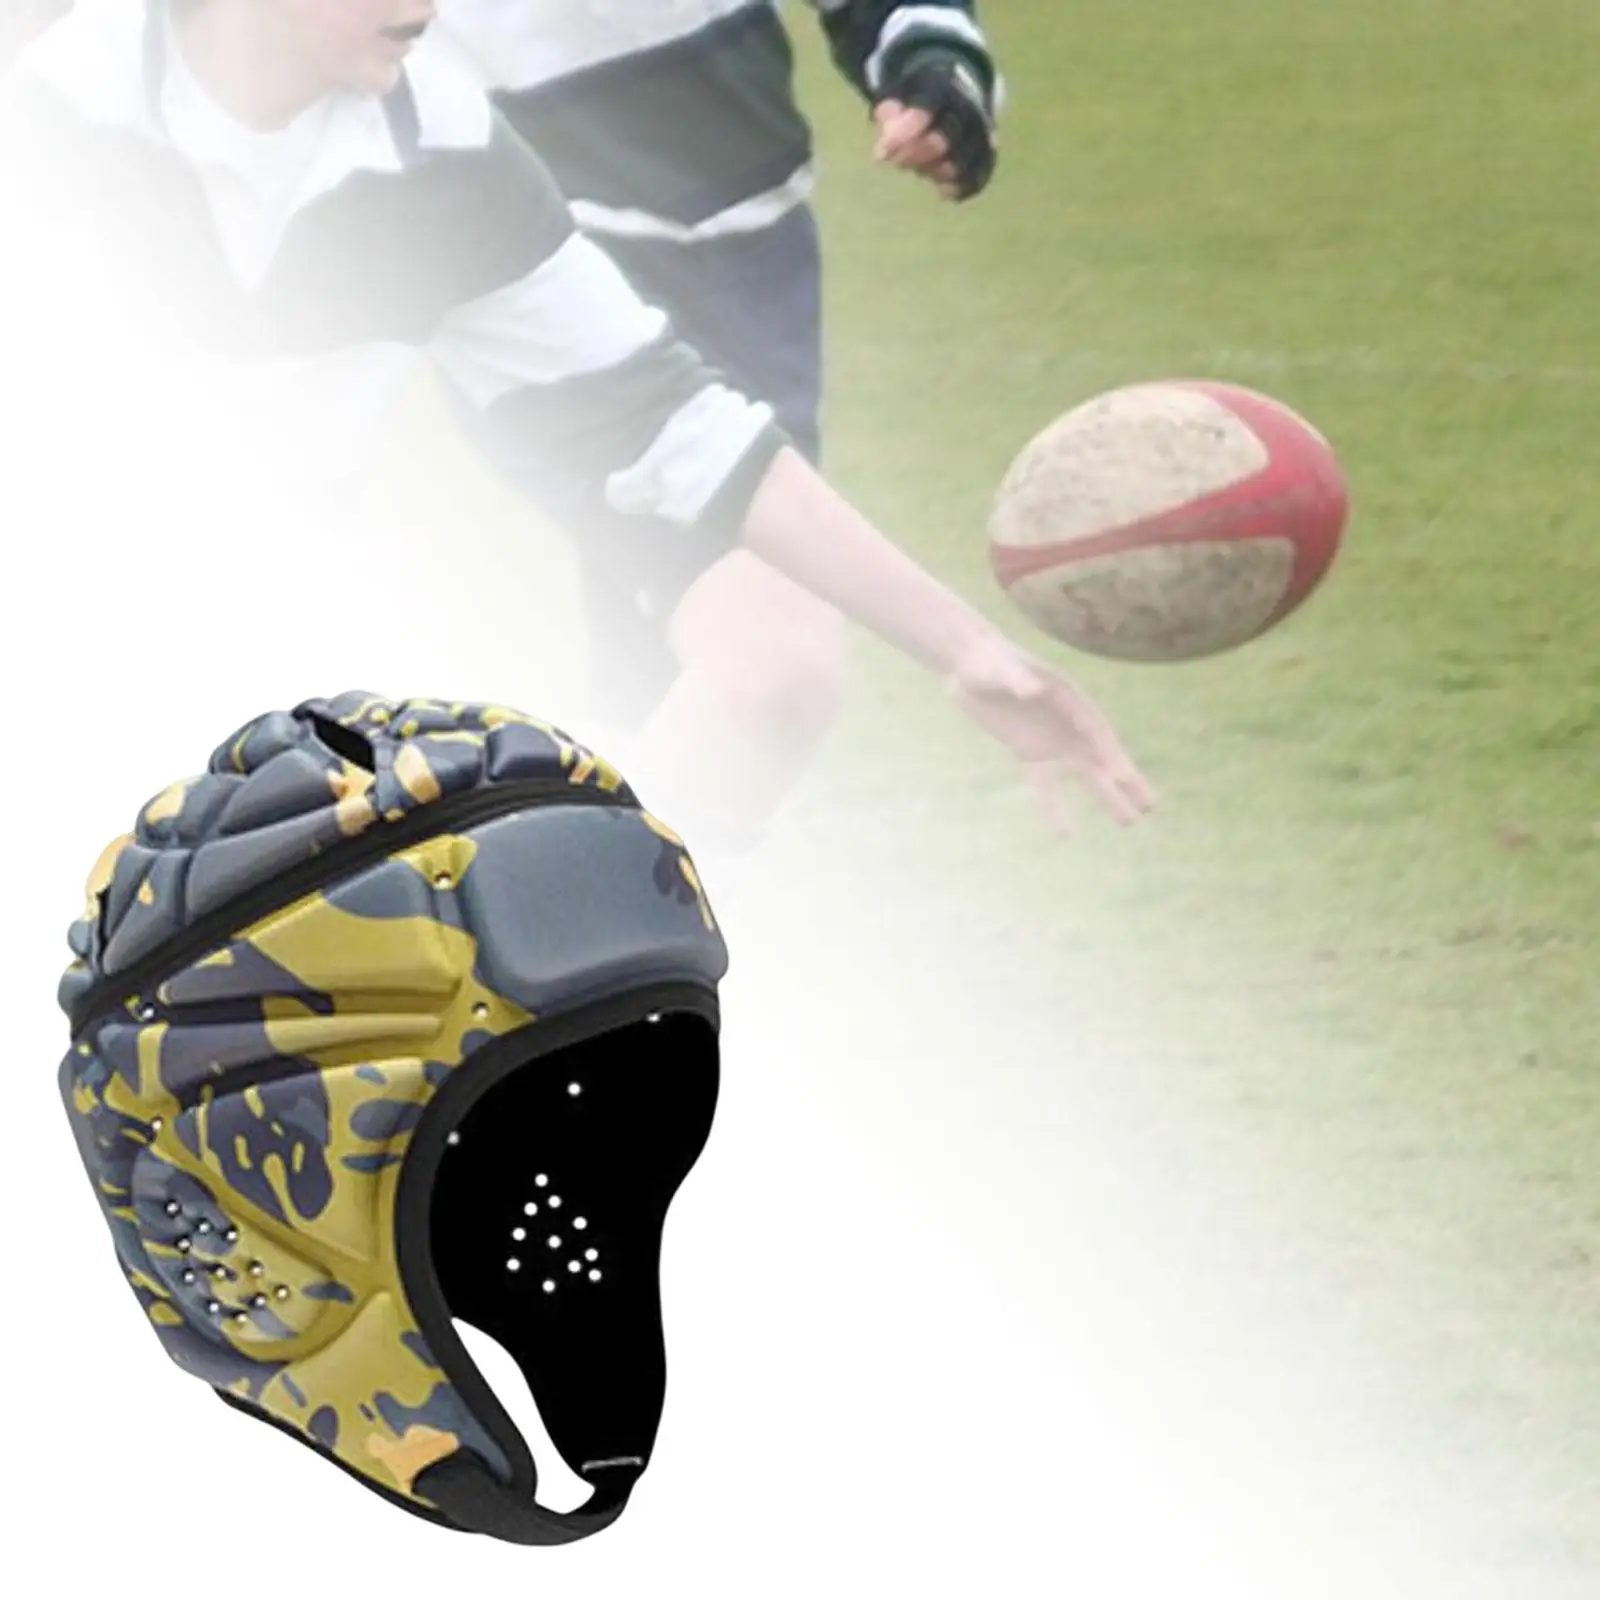 Rugby Headgear Protective Children Youth Soft Padded Goalkeeper Adjustable Sponge Football Hat for Skateboard Soccer